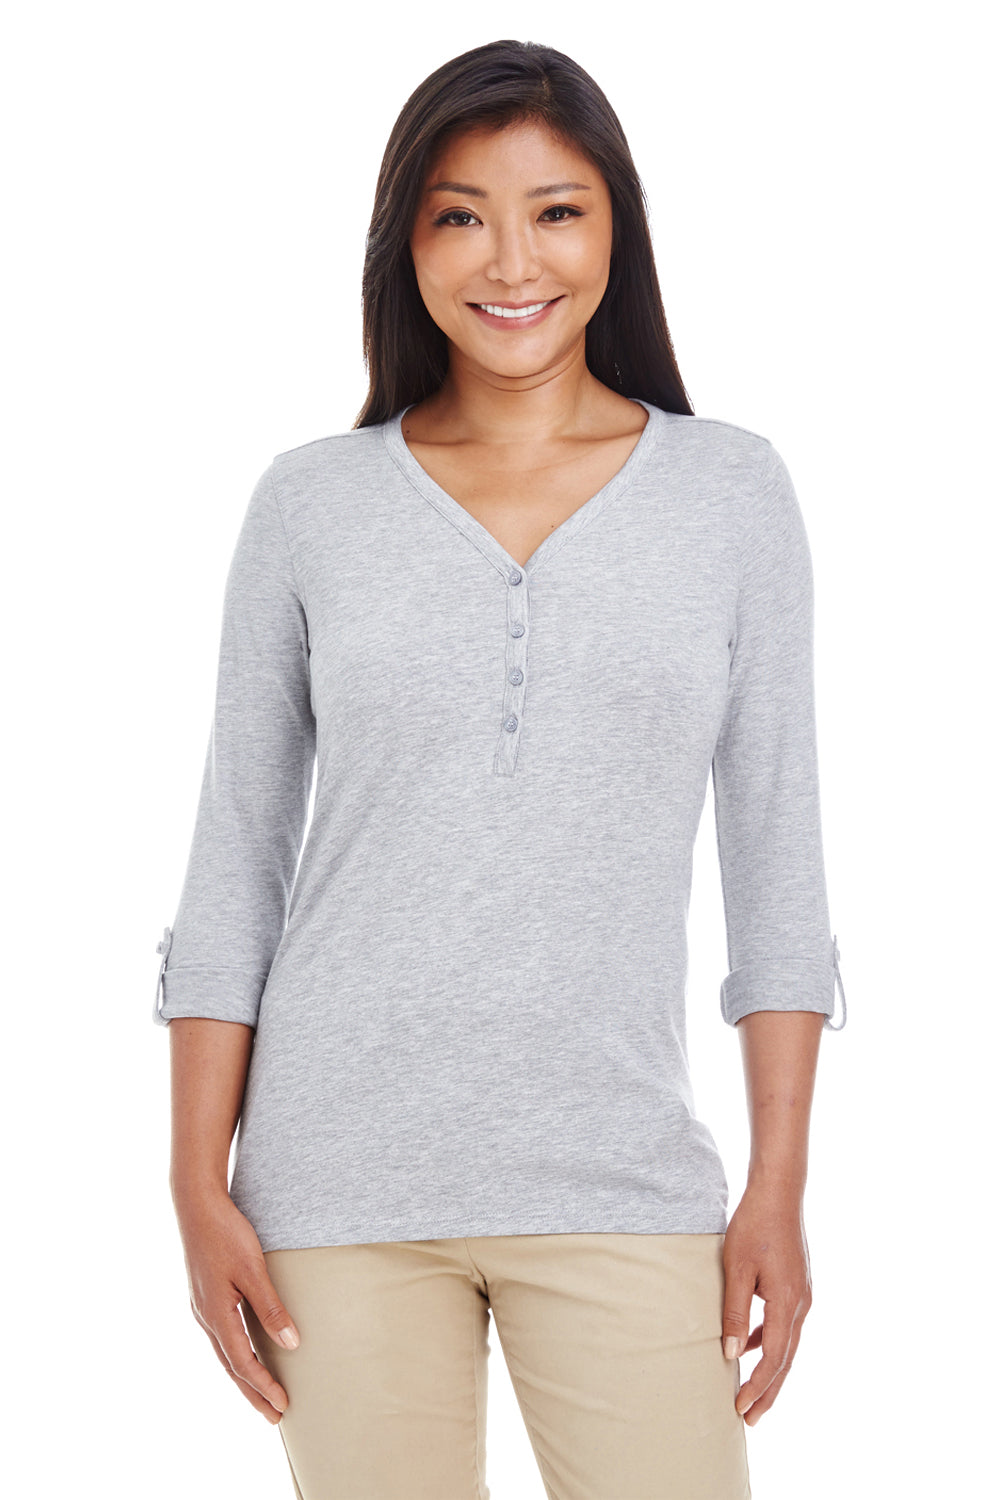 Devon & Jones DP186W Womens Perfect Fit Long Sleeve V-Neck T-Shirt Heather Grey Front